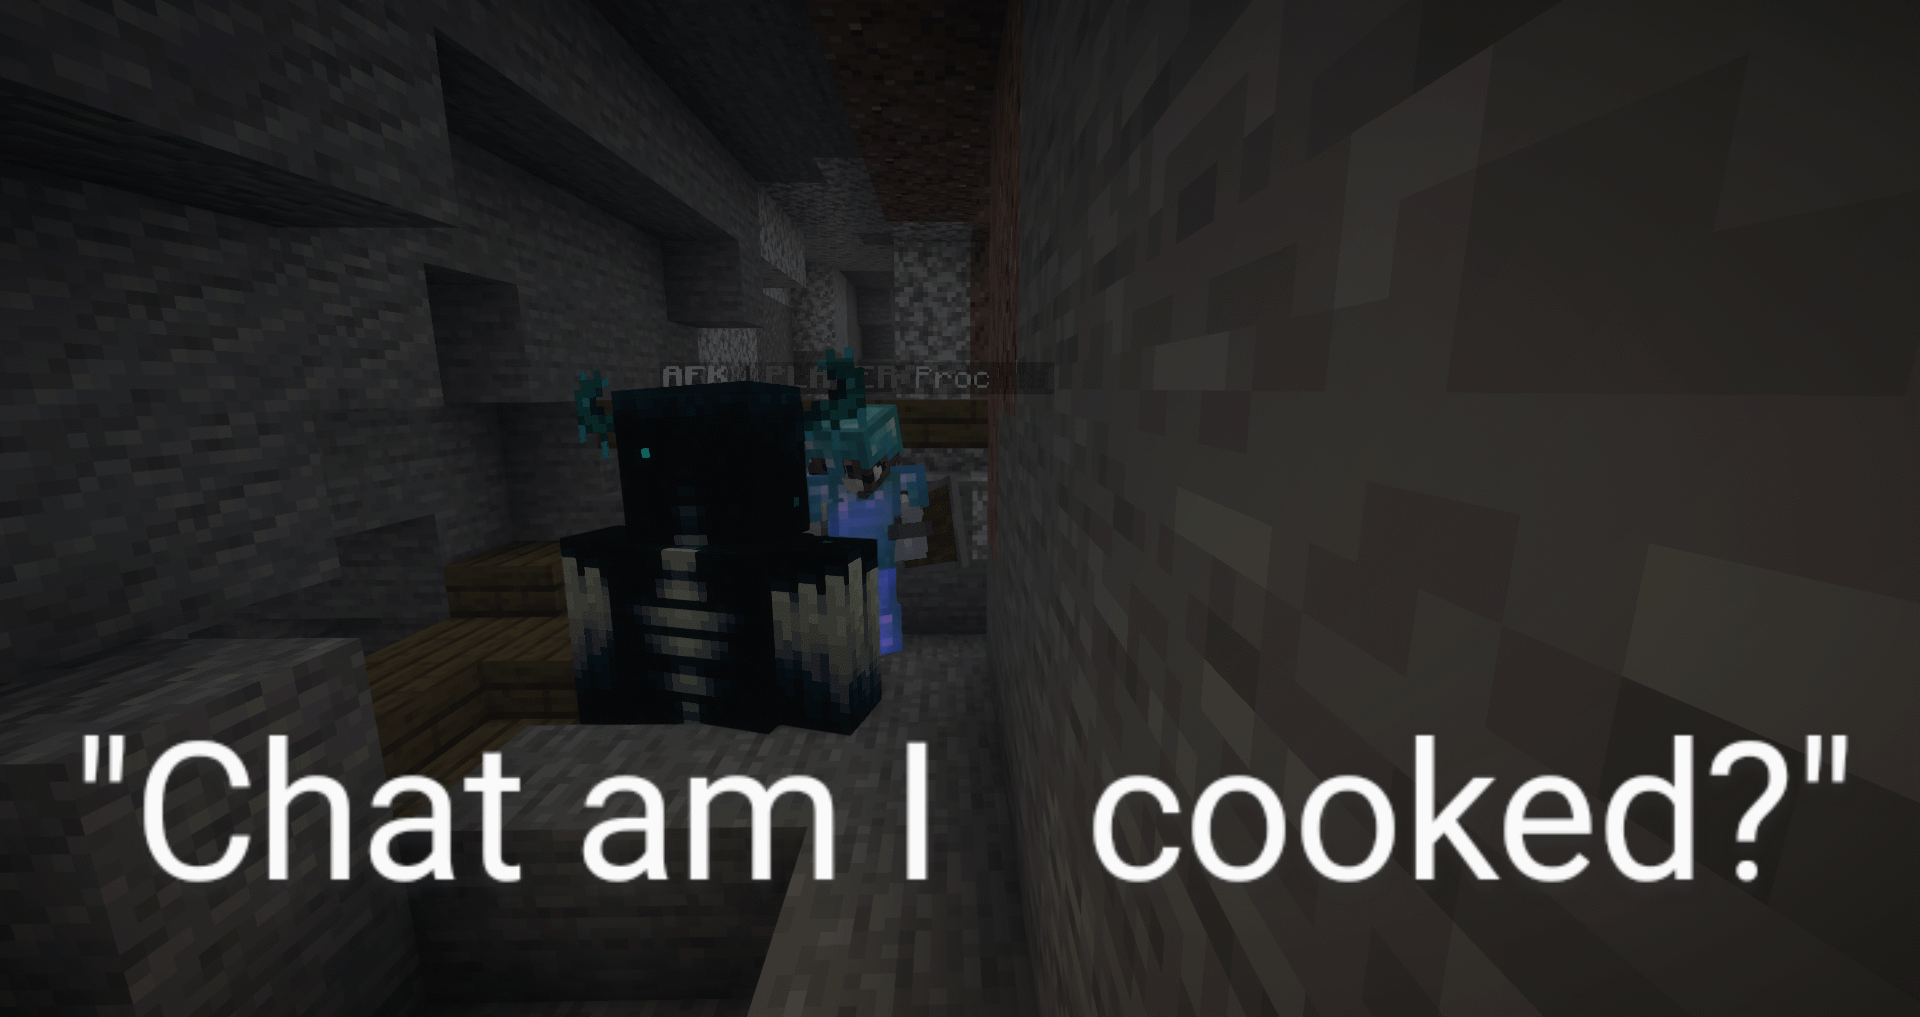 Minecraft Memes - Am I Toast?